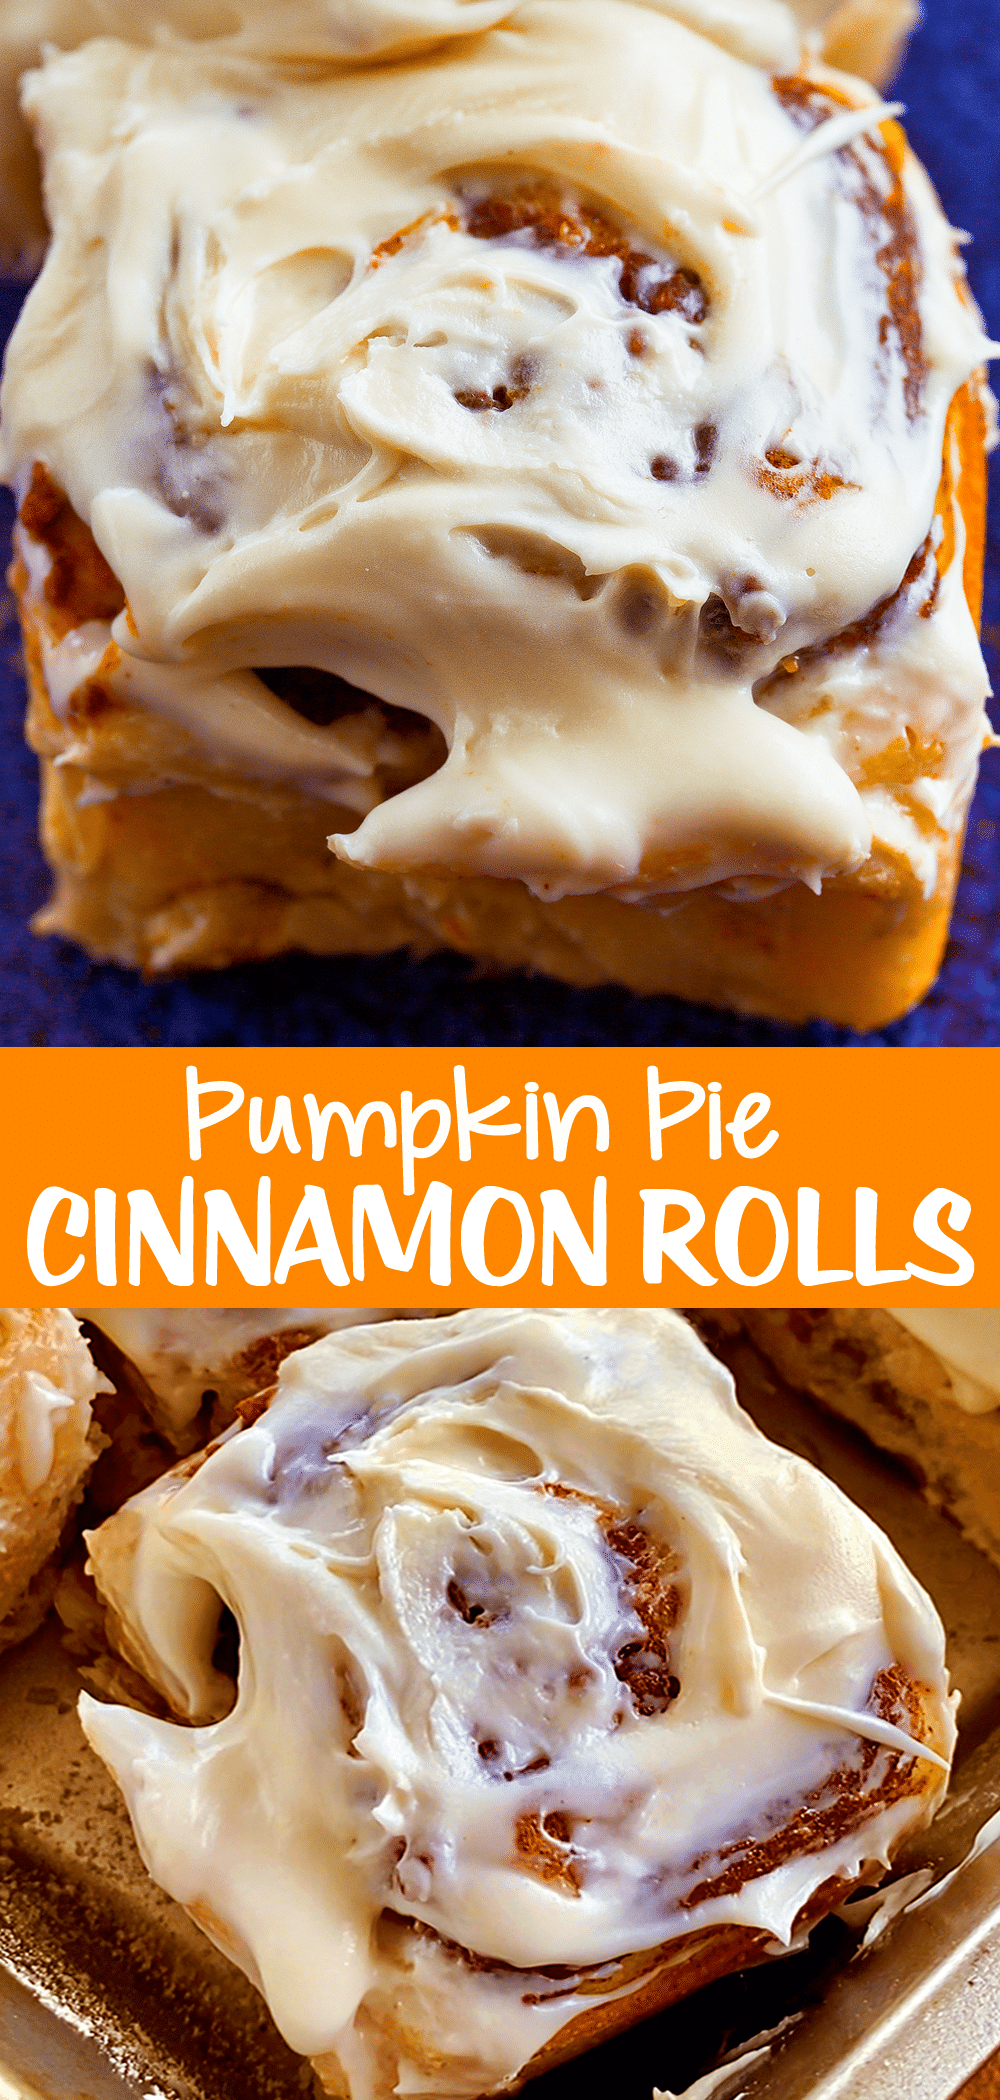 Pumpkin Pie Cinnamon Roll Recipe